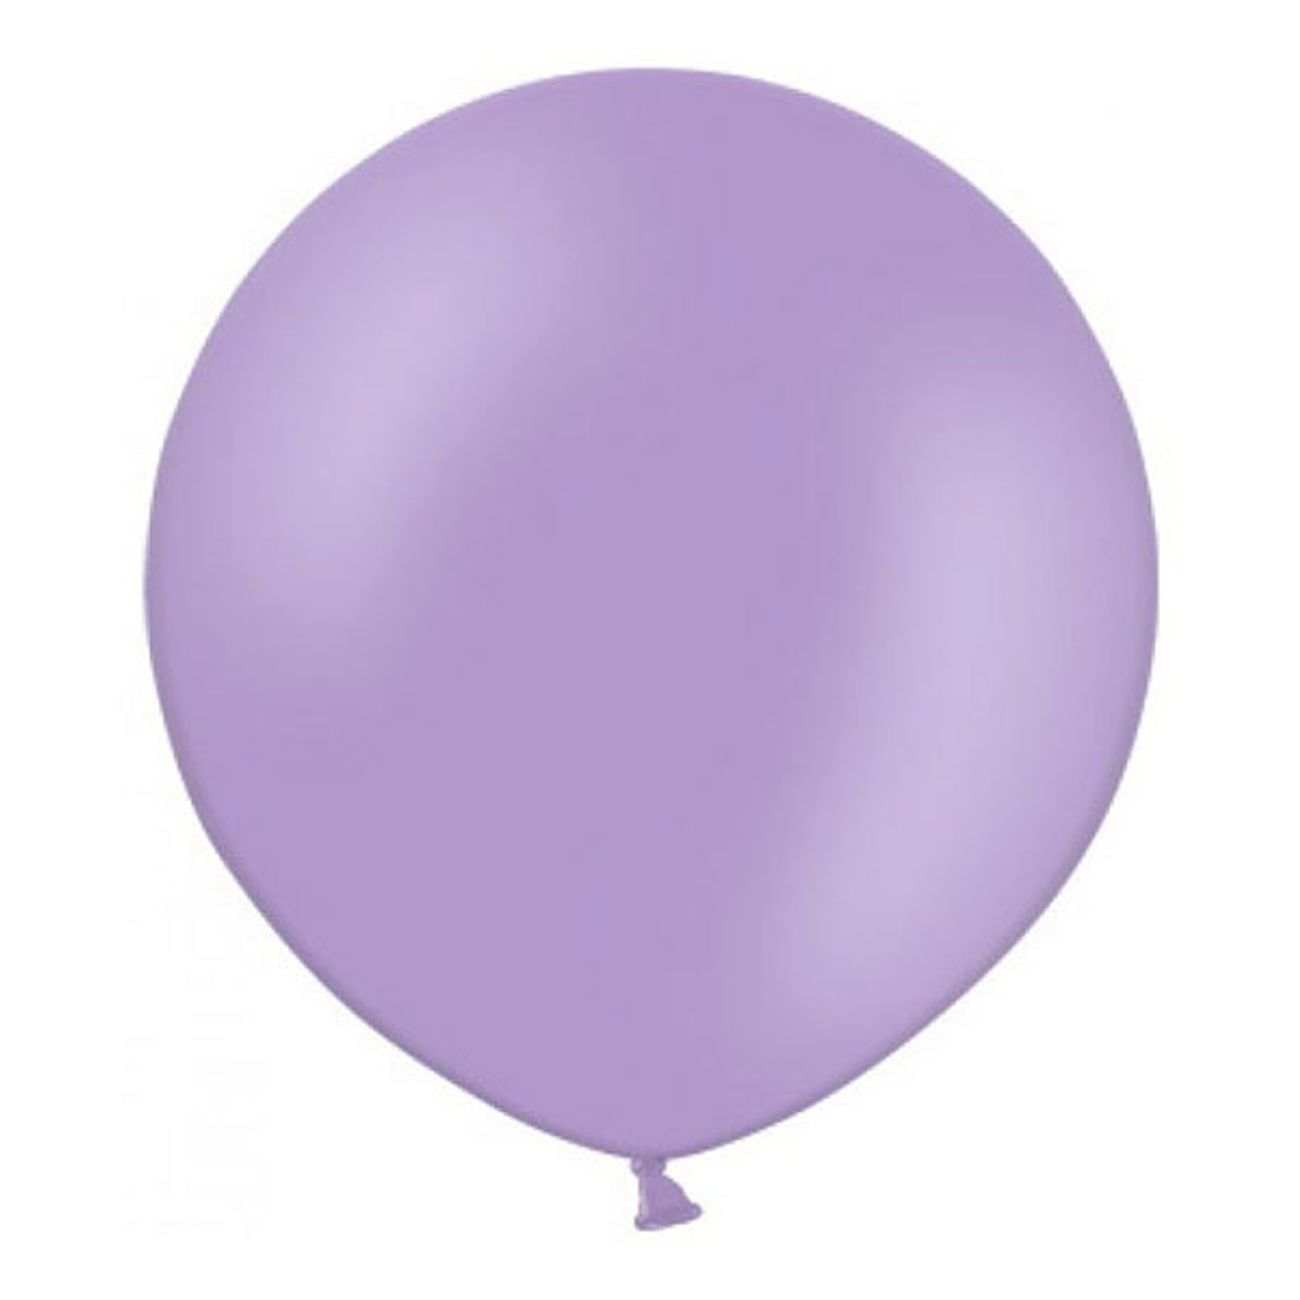 jatteballong-lila-1